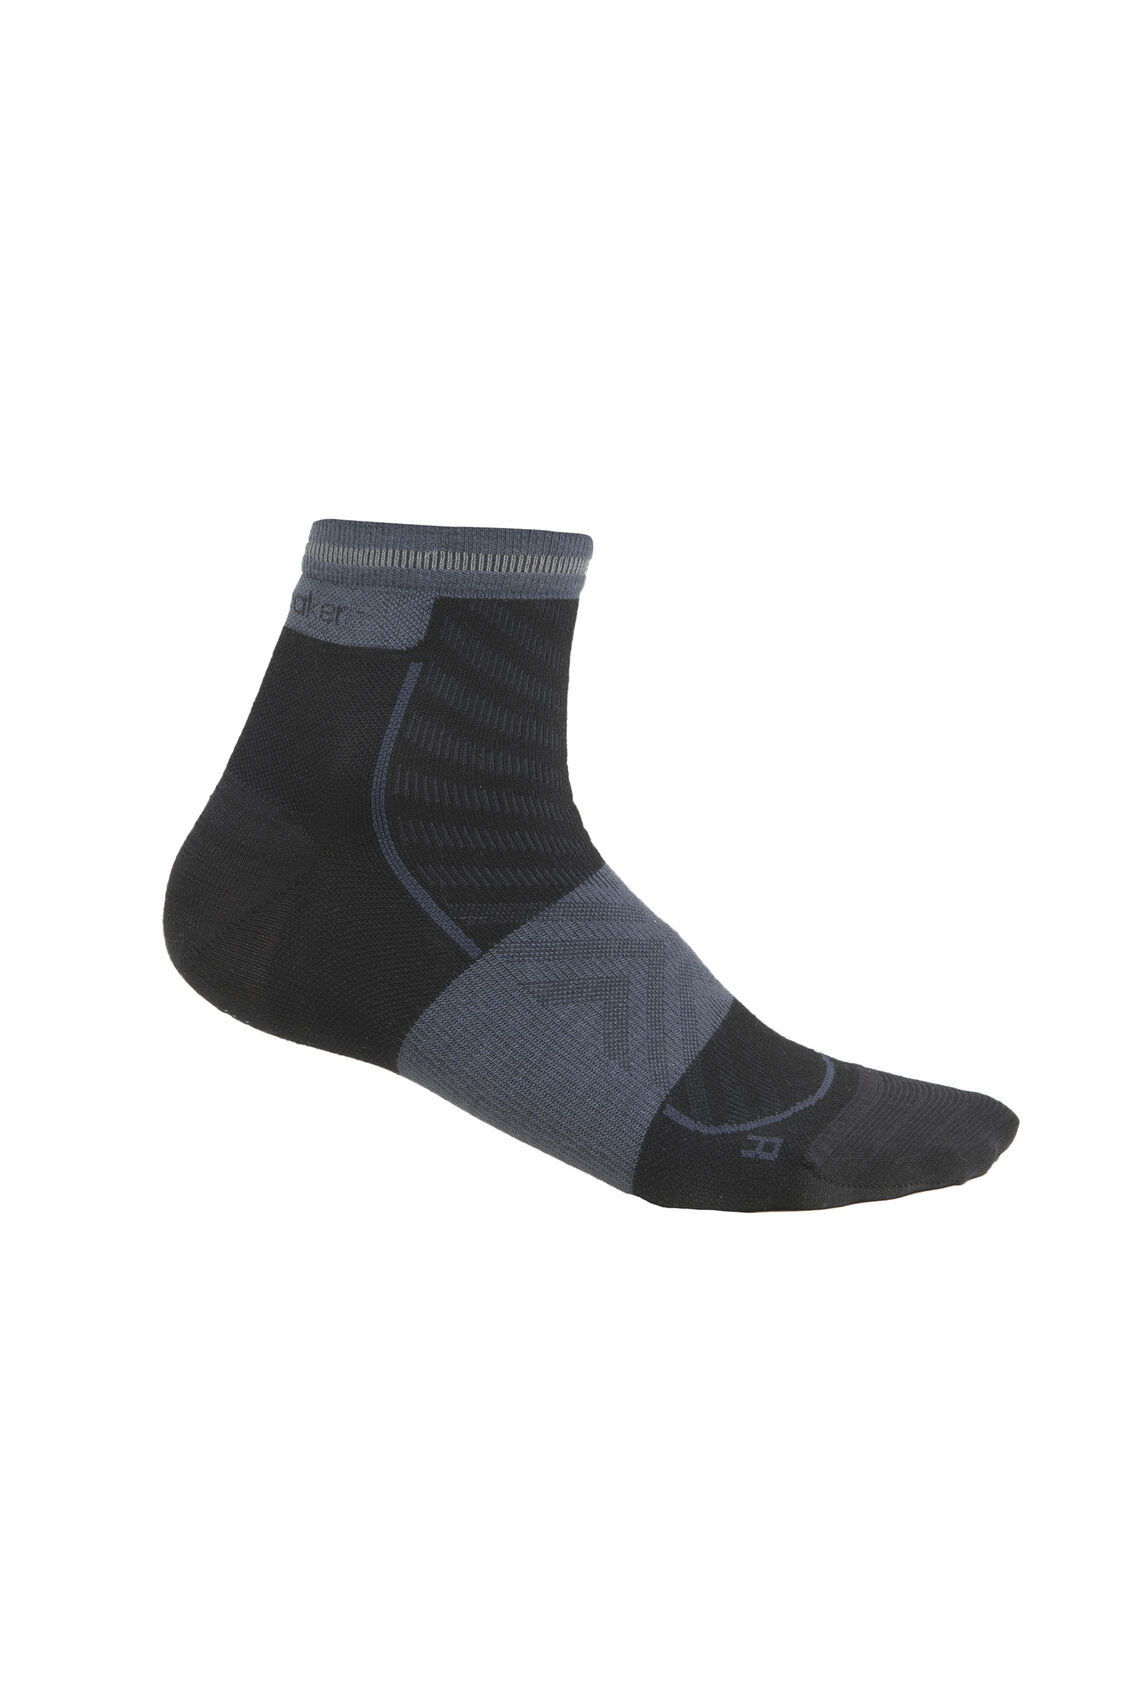 Icebreaker Merino Blend Run+ Ultralight Mini Socks (Women's) - Black/Graphite - Find Your Feet Australia Hobart Launceston Tasmania